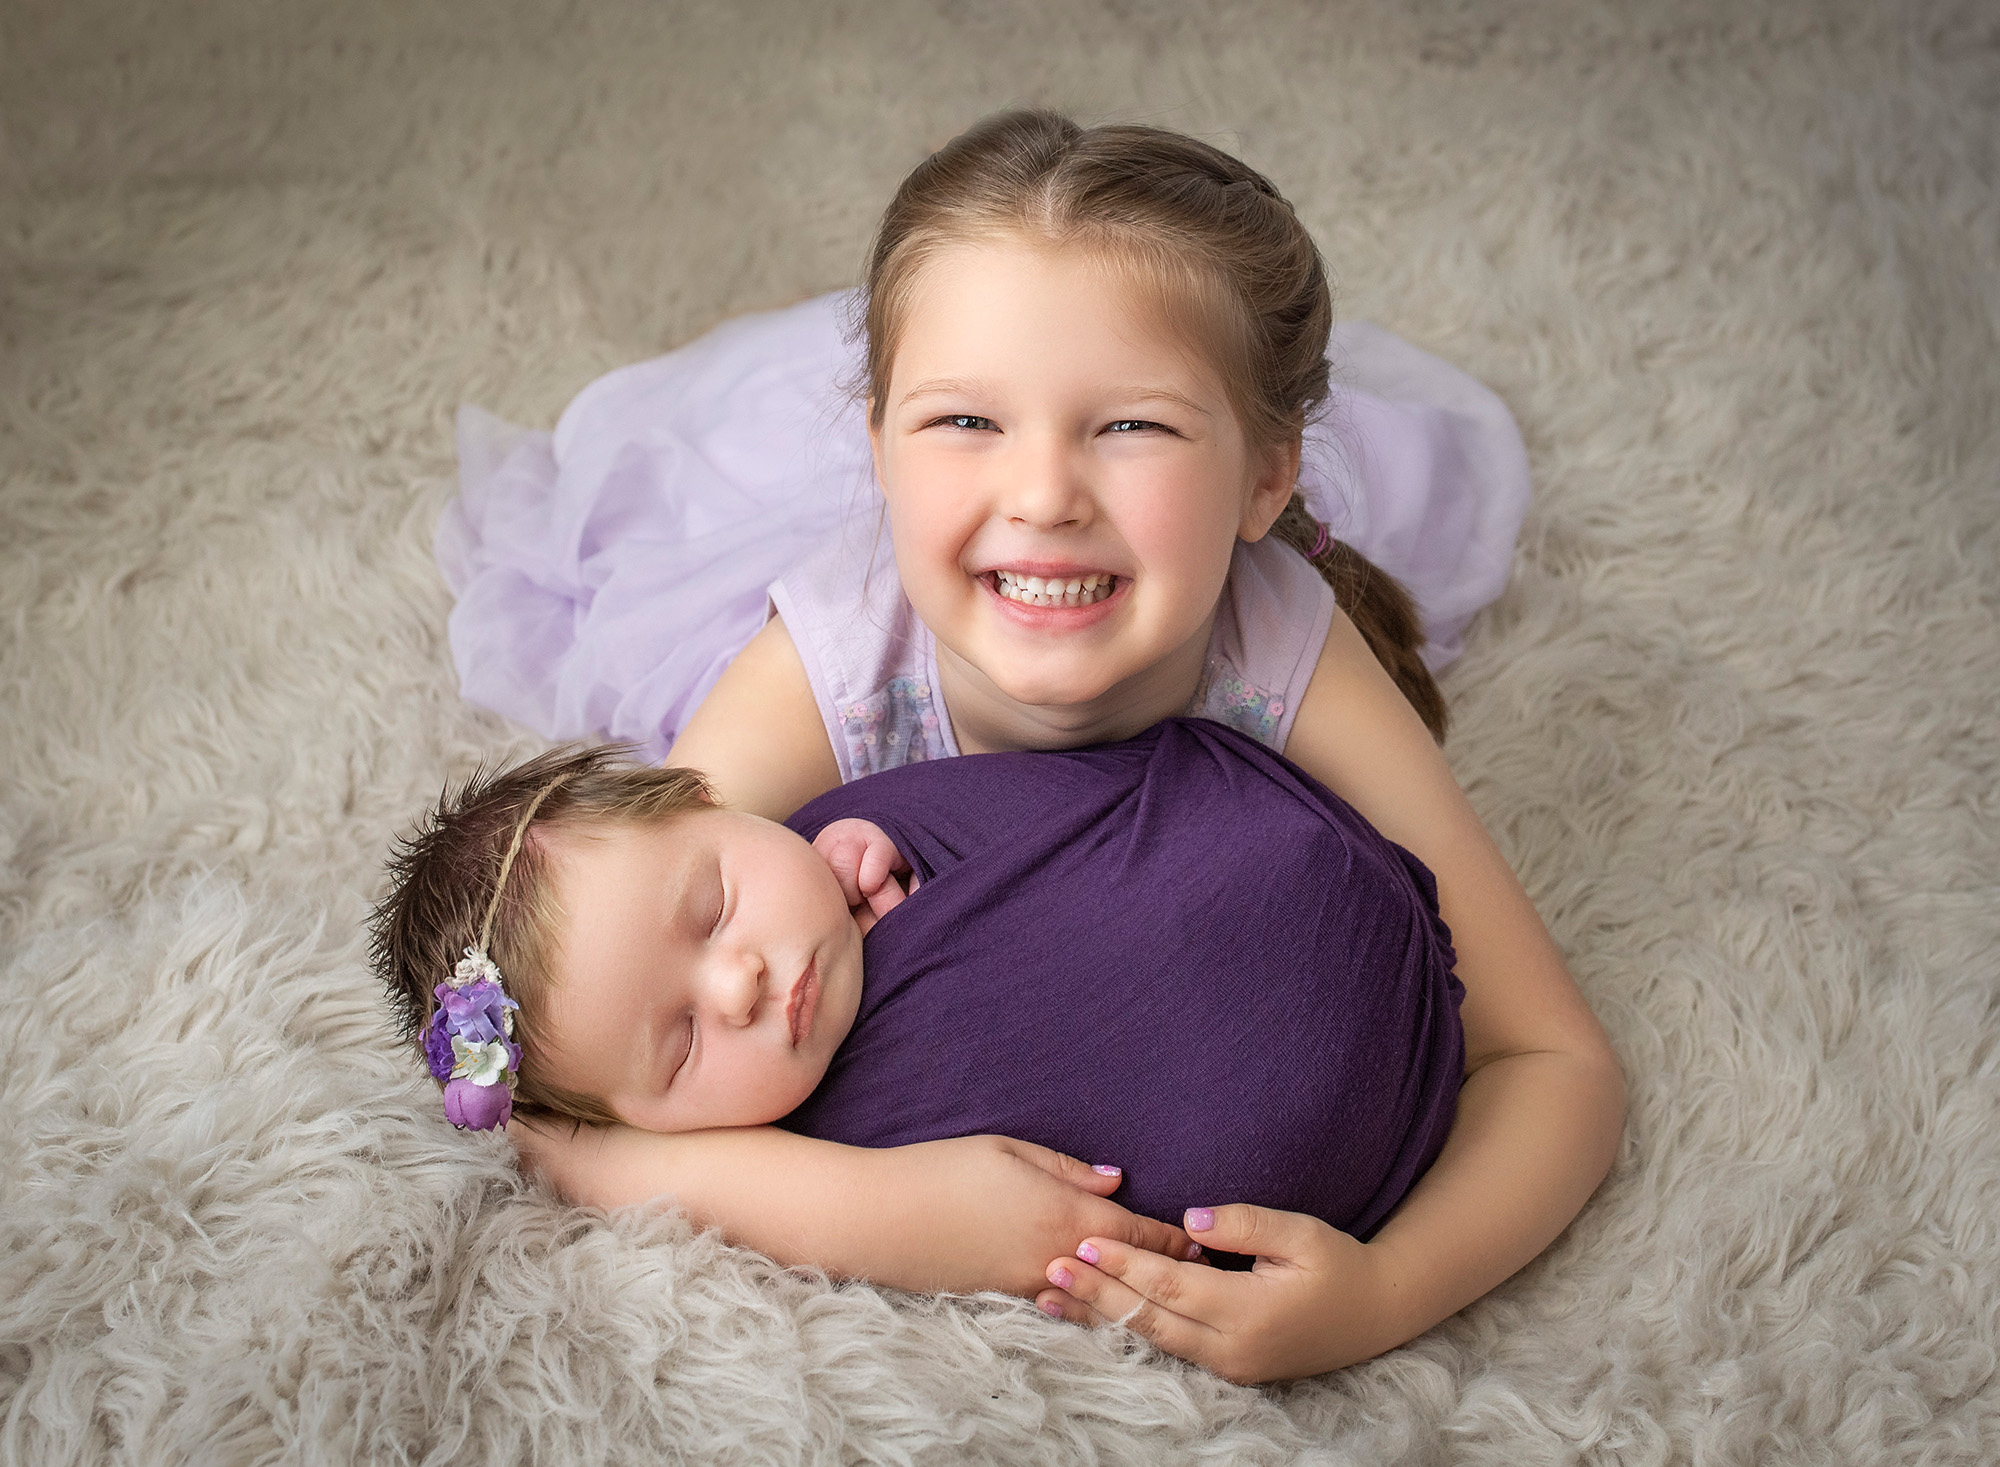 Newborn Sibling Photos smiling young girl wearing purple dress cradling newborn baby sister swaddled in purple